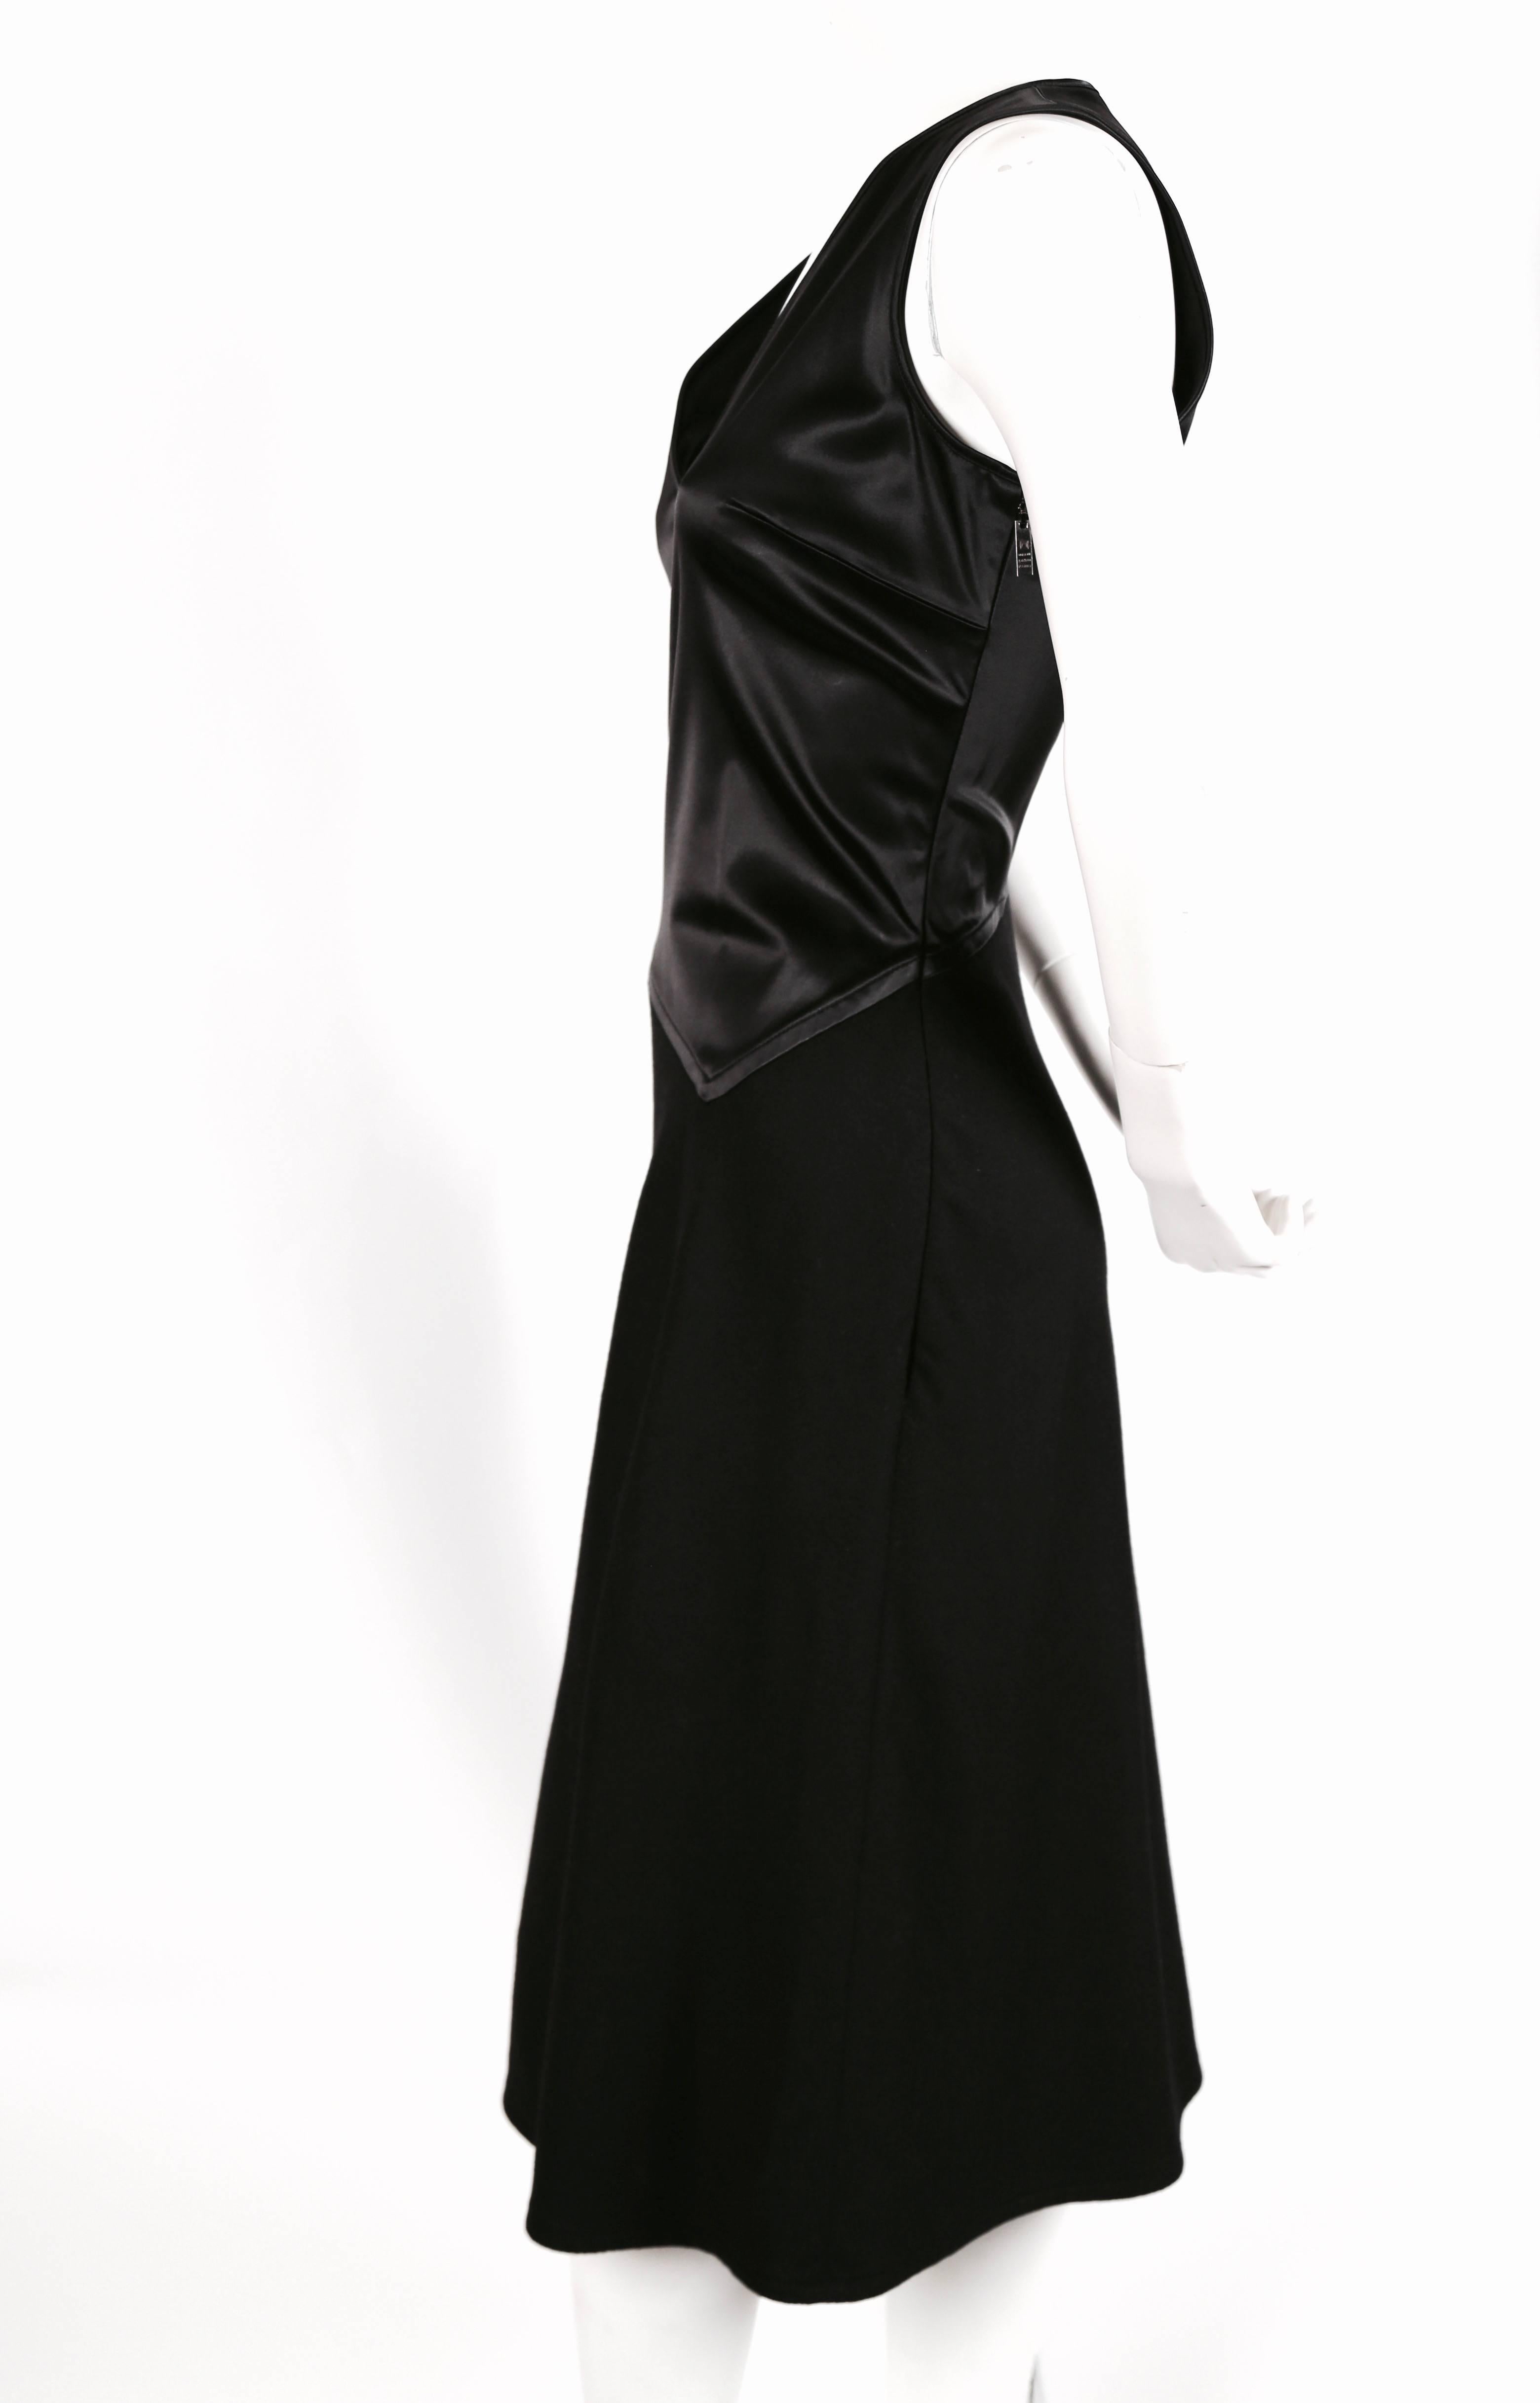 Black 1990's HERVE LEGER satin and angora black dress with asymmetrical slit